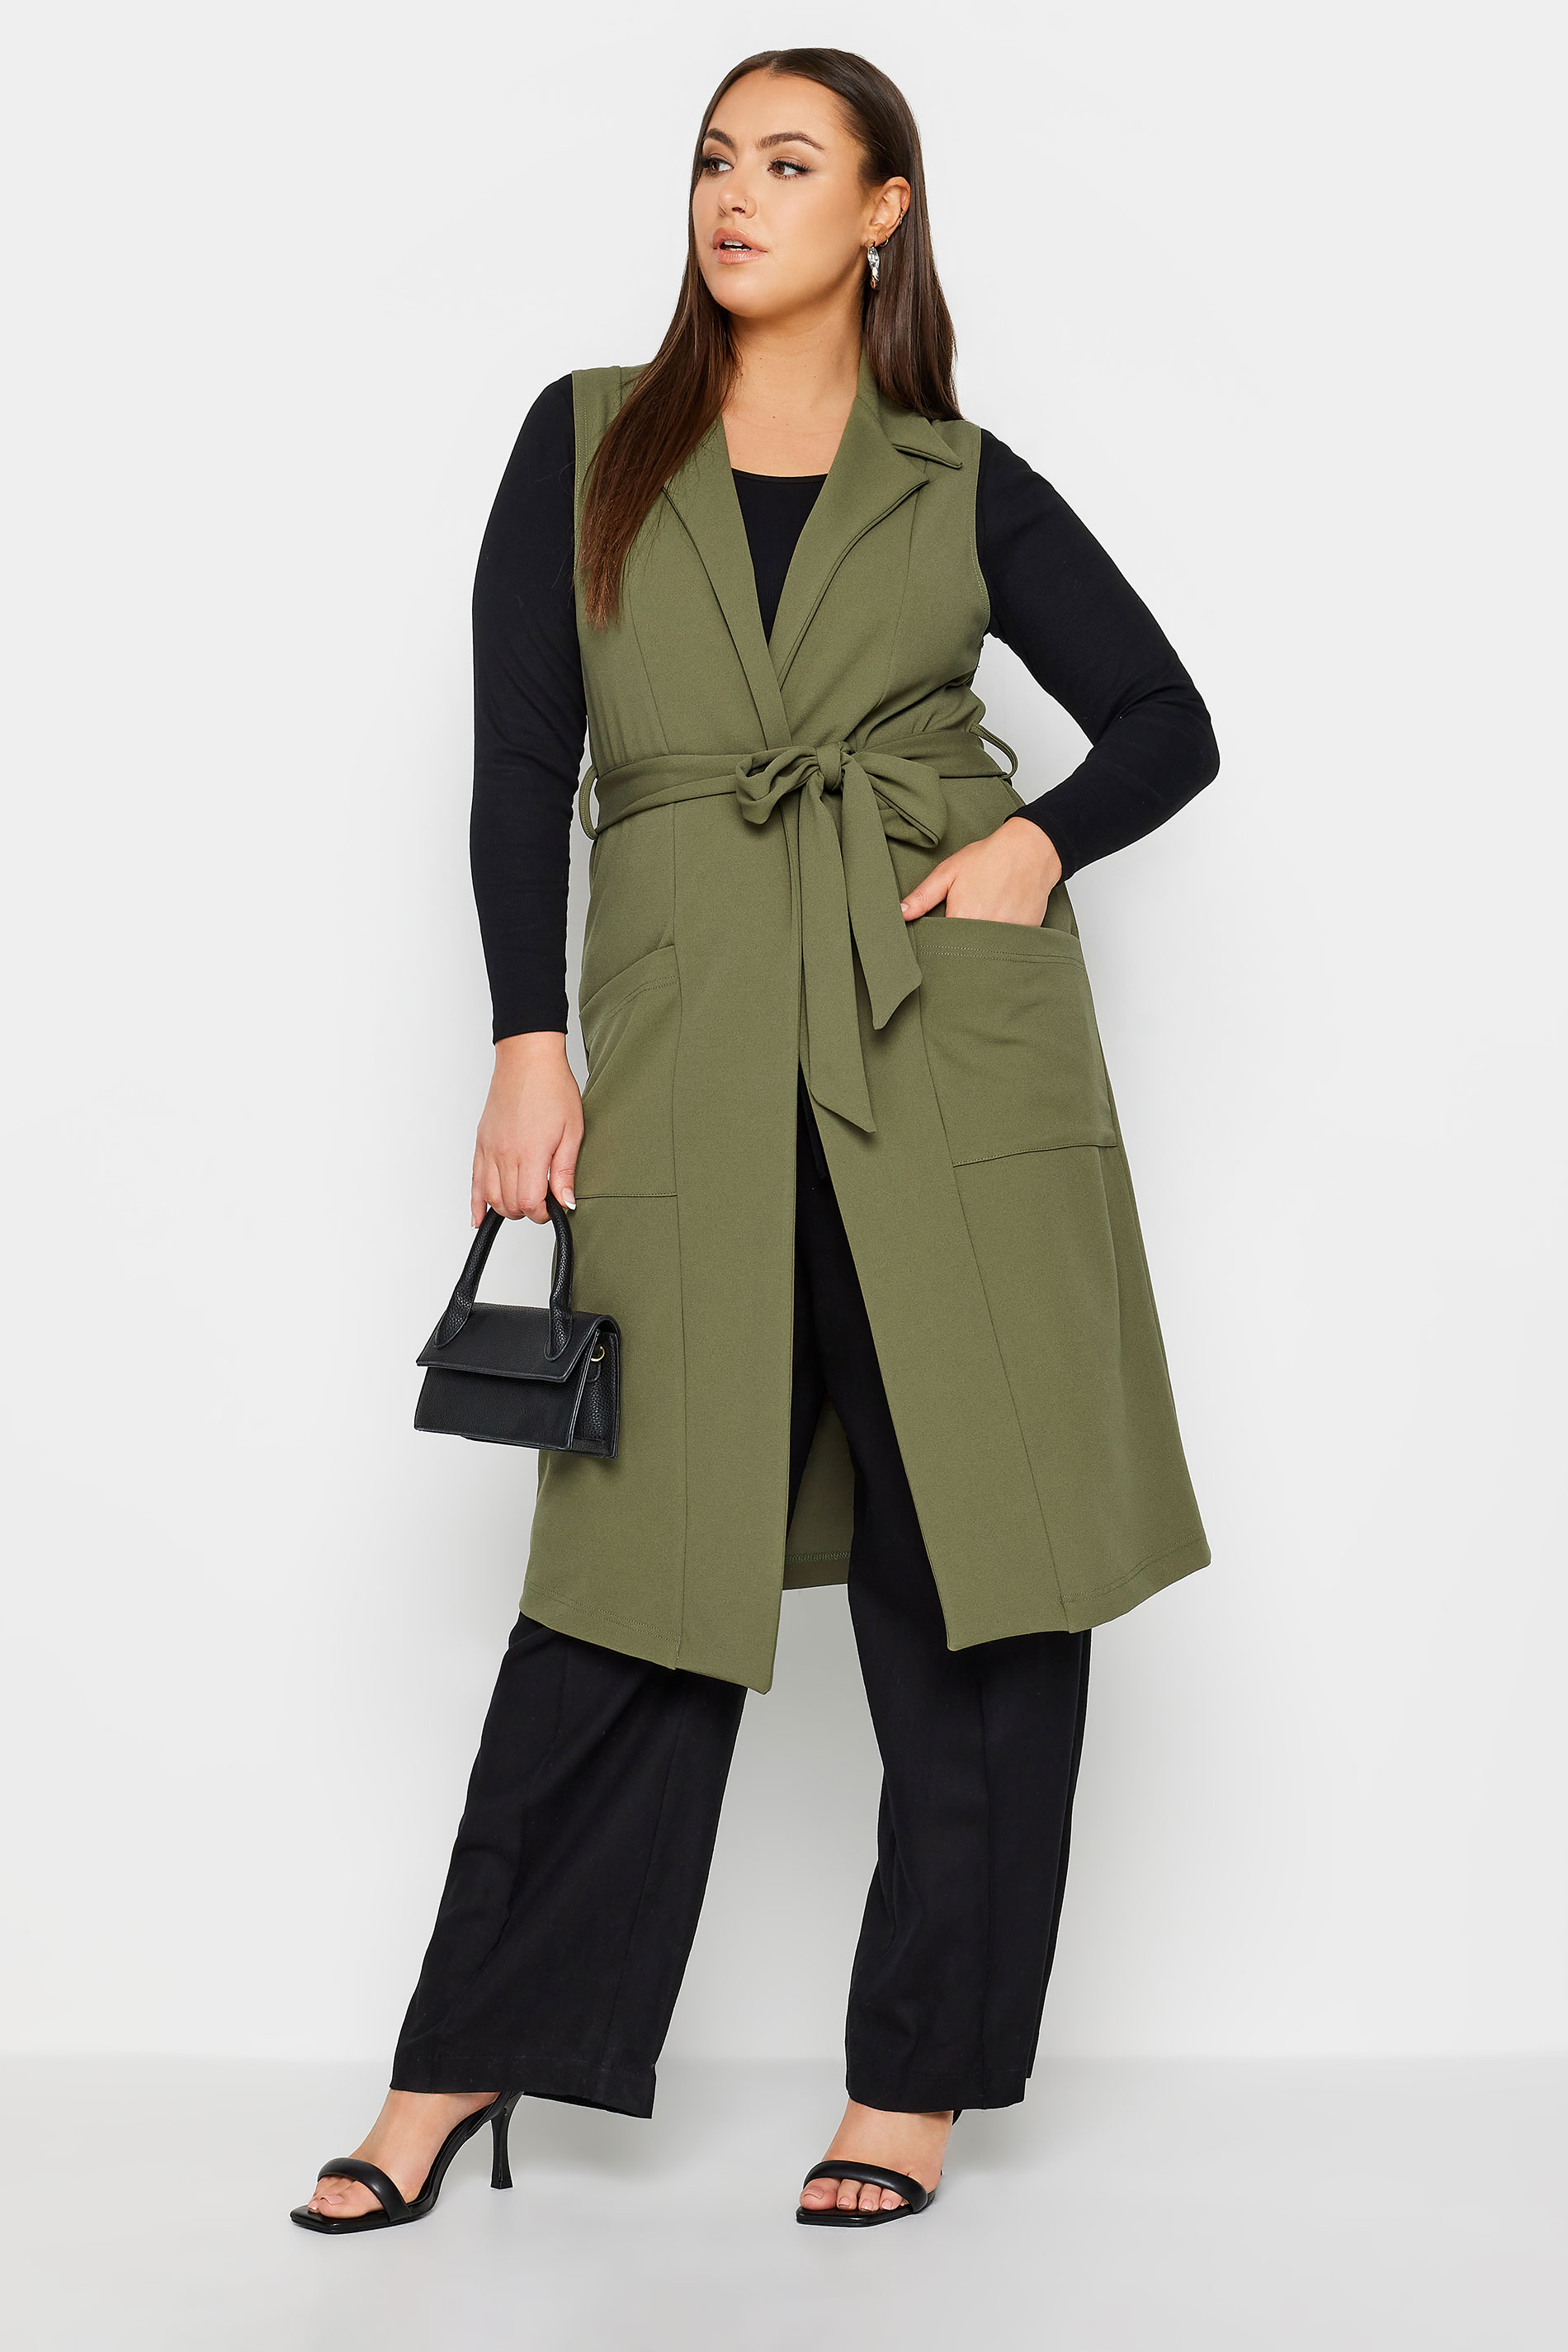 YOURS Plus Size Black Longline Waistcoat | Yours Clothing 1